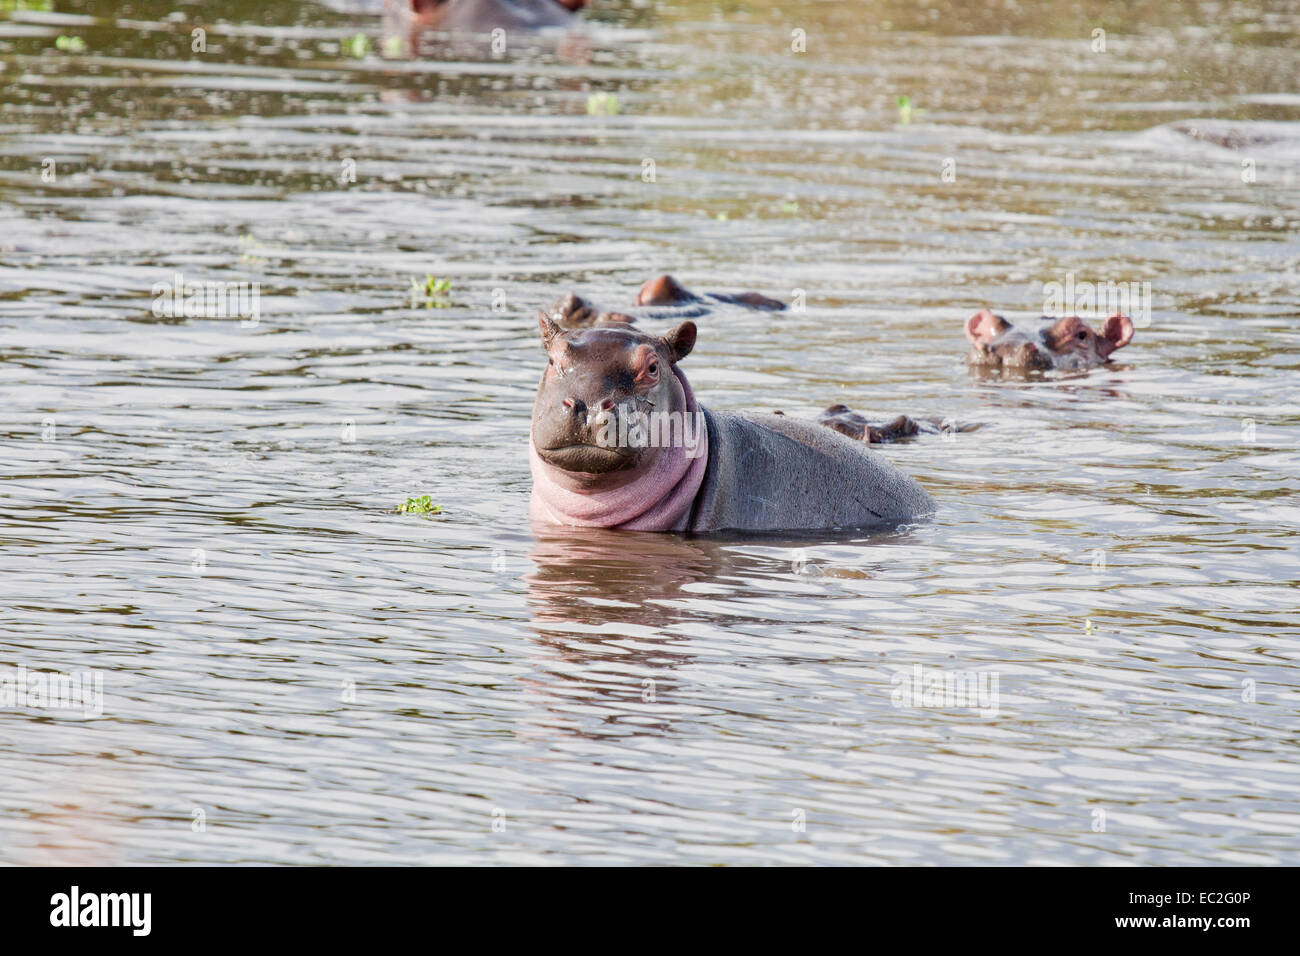 Baby Hippo riding on mum's back - Lake Oloidien, Kenya Stock Photo